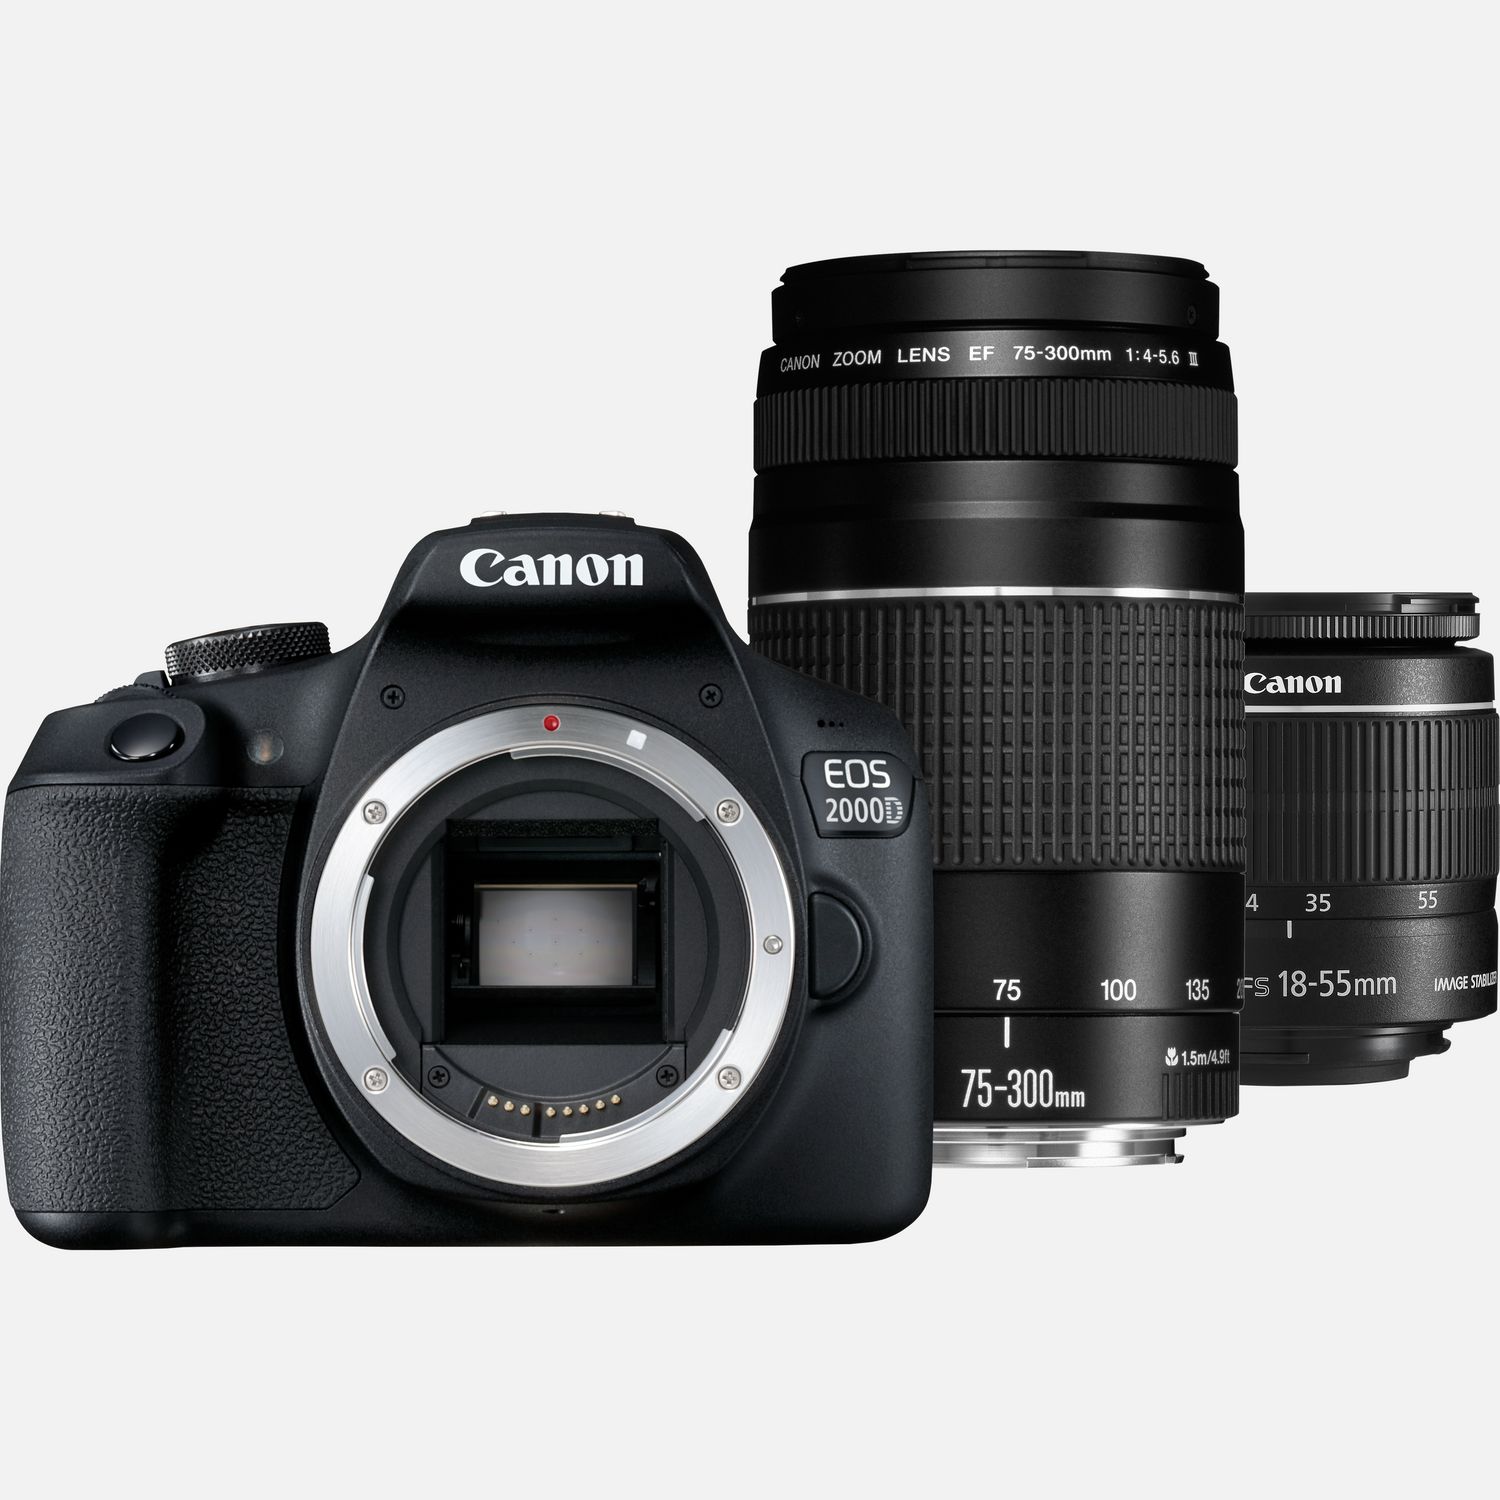 Buy Canon EOS 2000D + EFS 1855mm IS II Lens + EF 75300mm III Lens in WiFi Cameras — Canon 